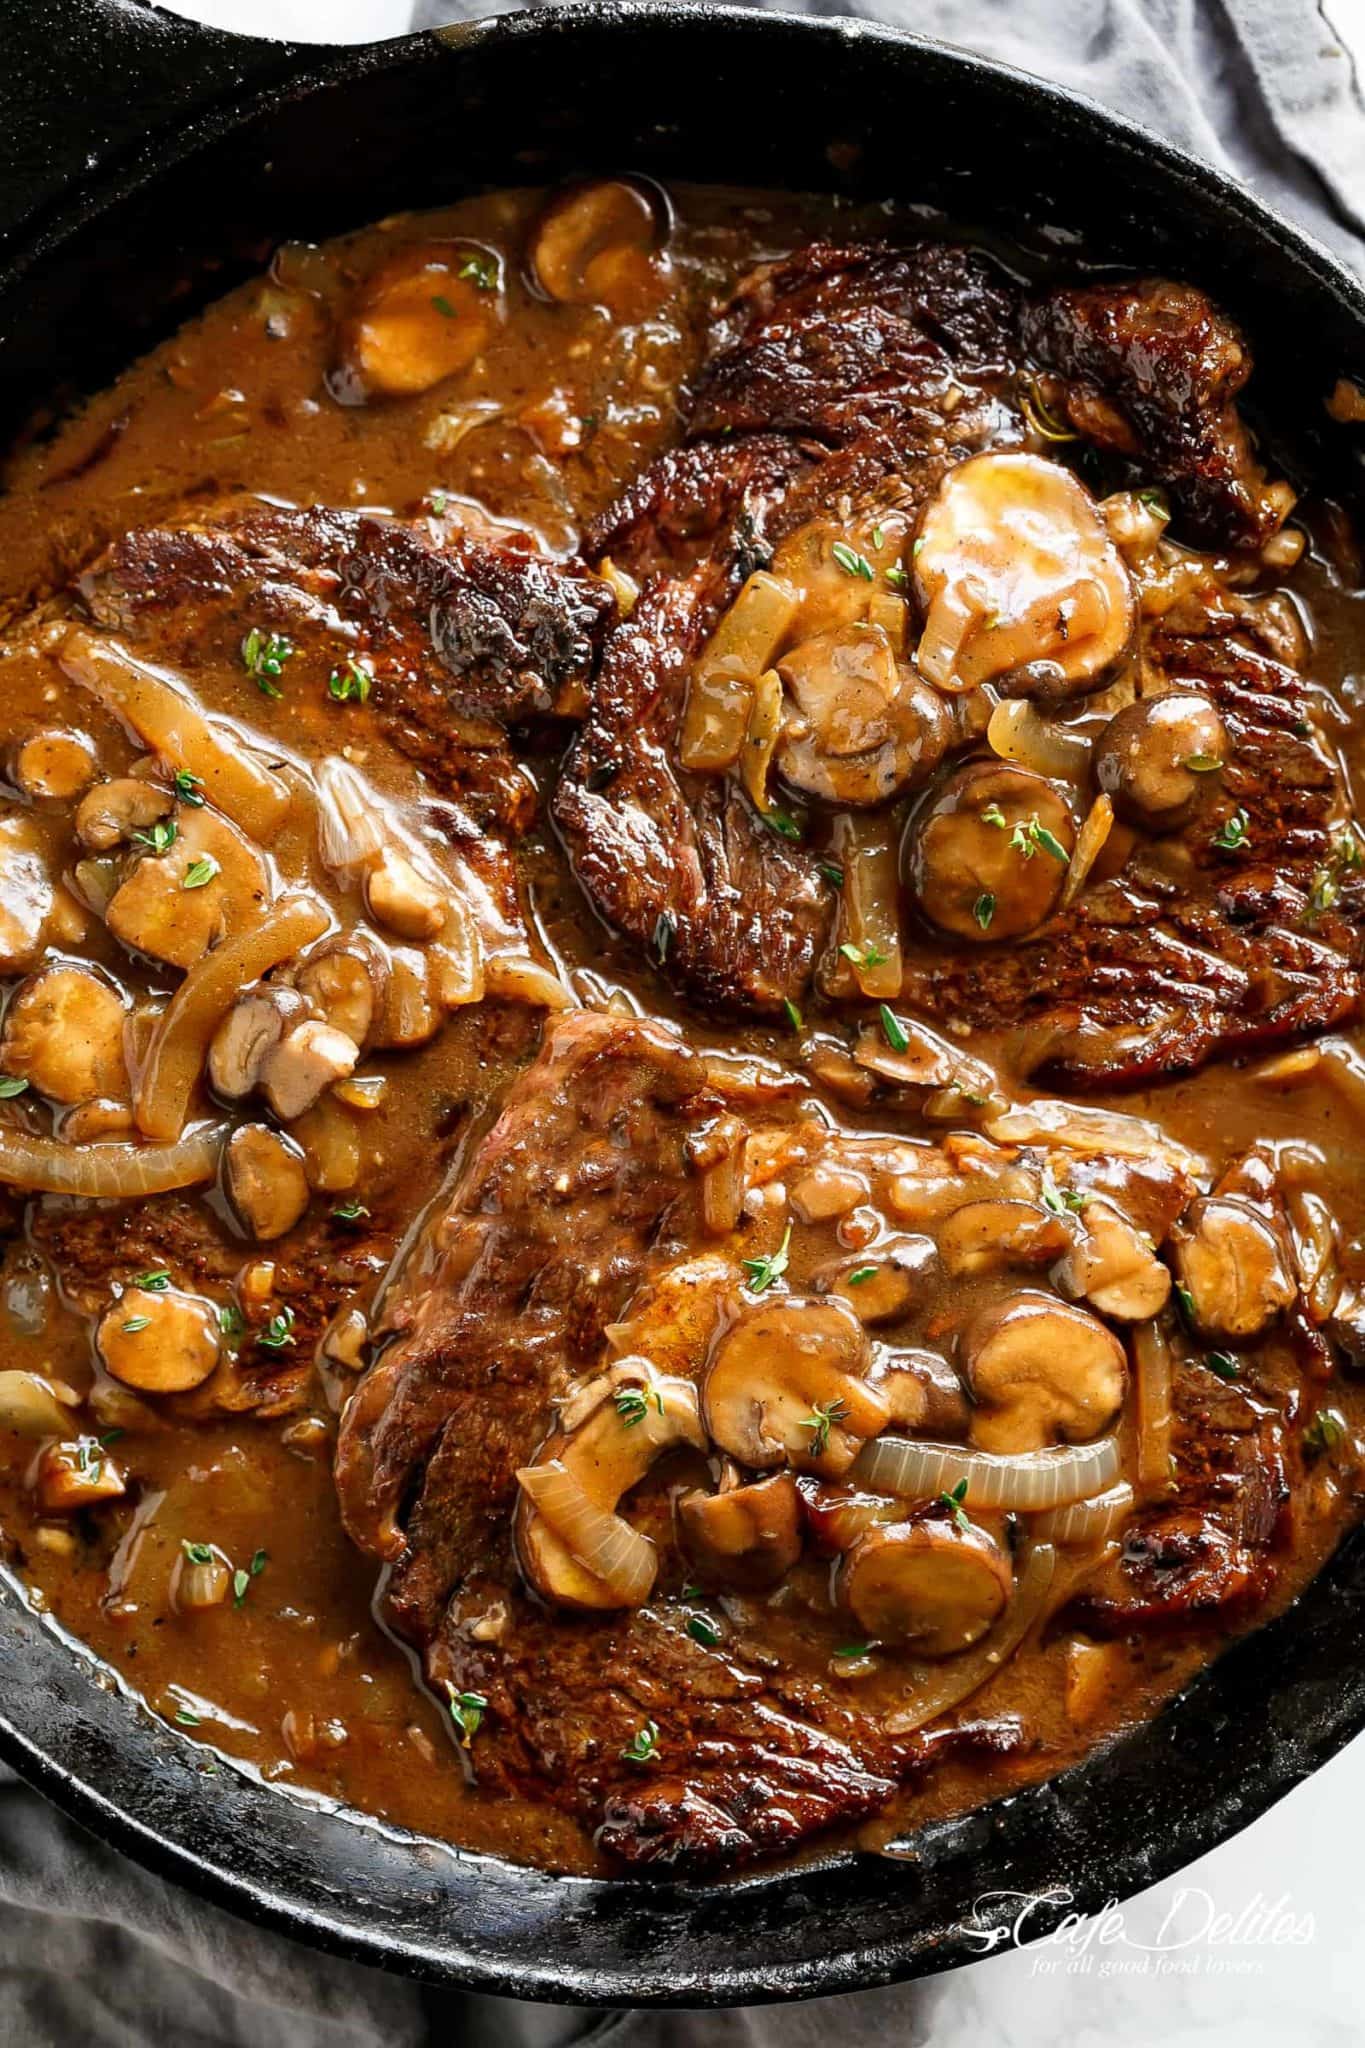 Steaks With Mushroom Gravy - Cafe Delites